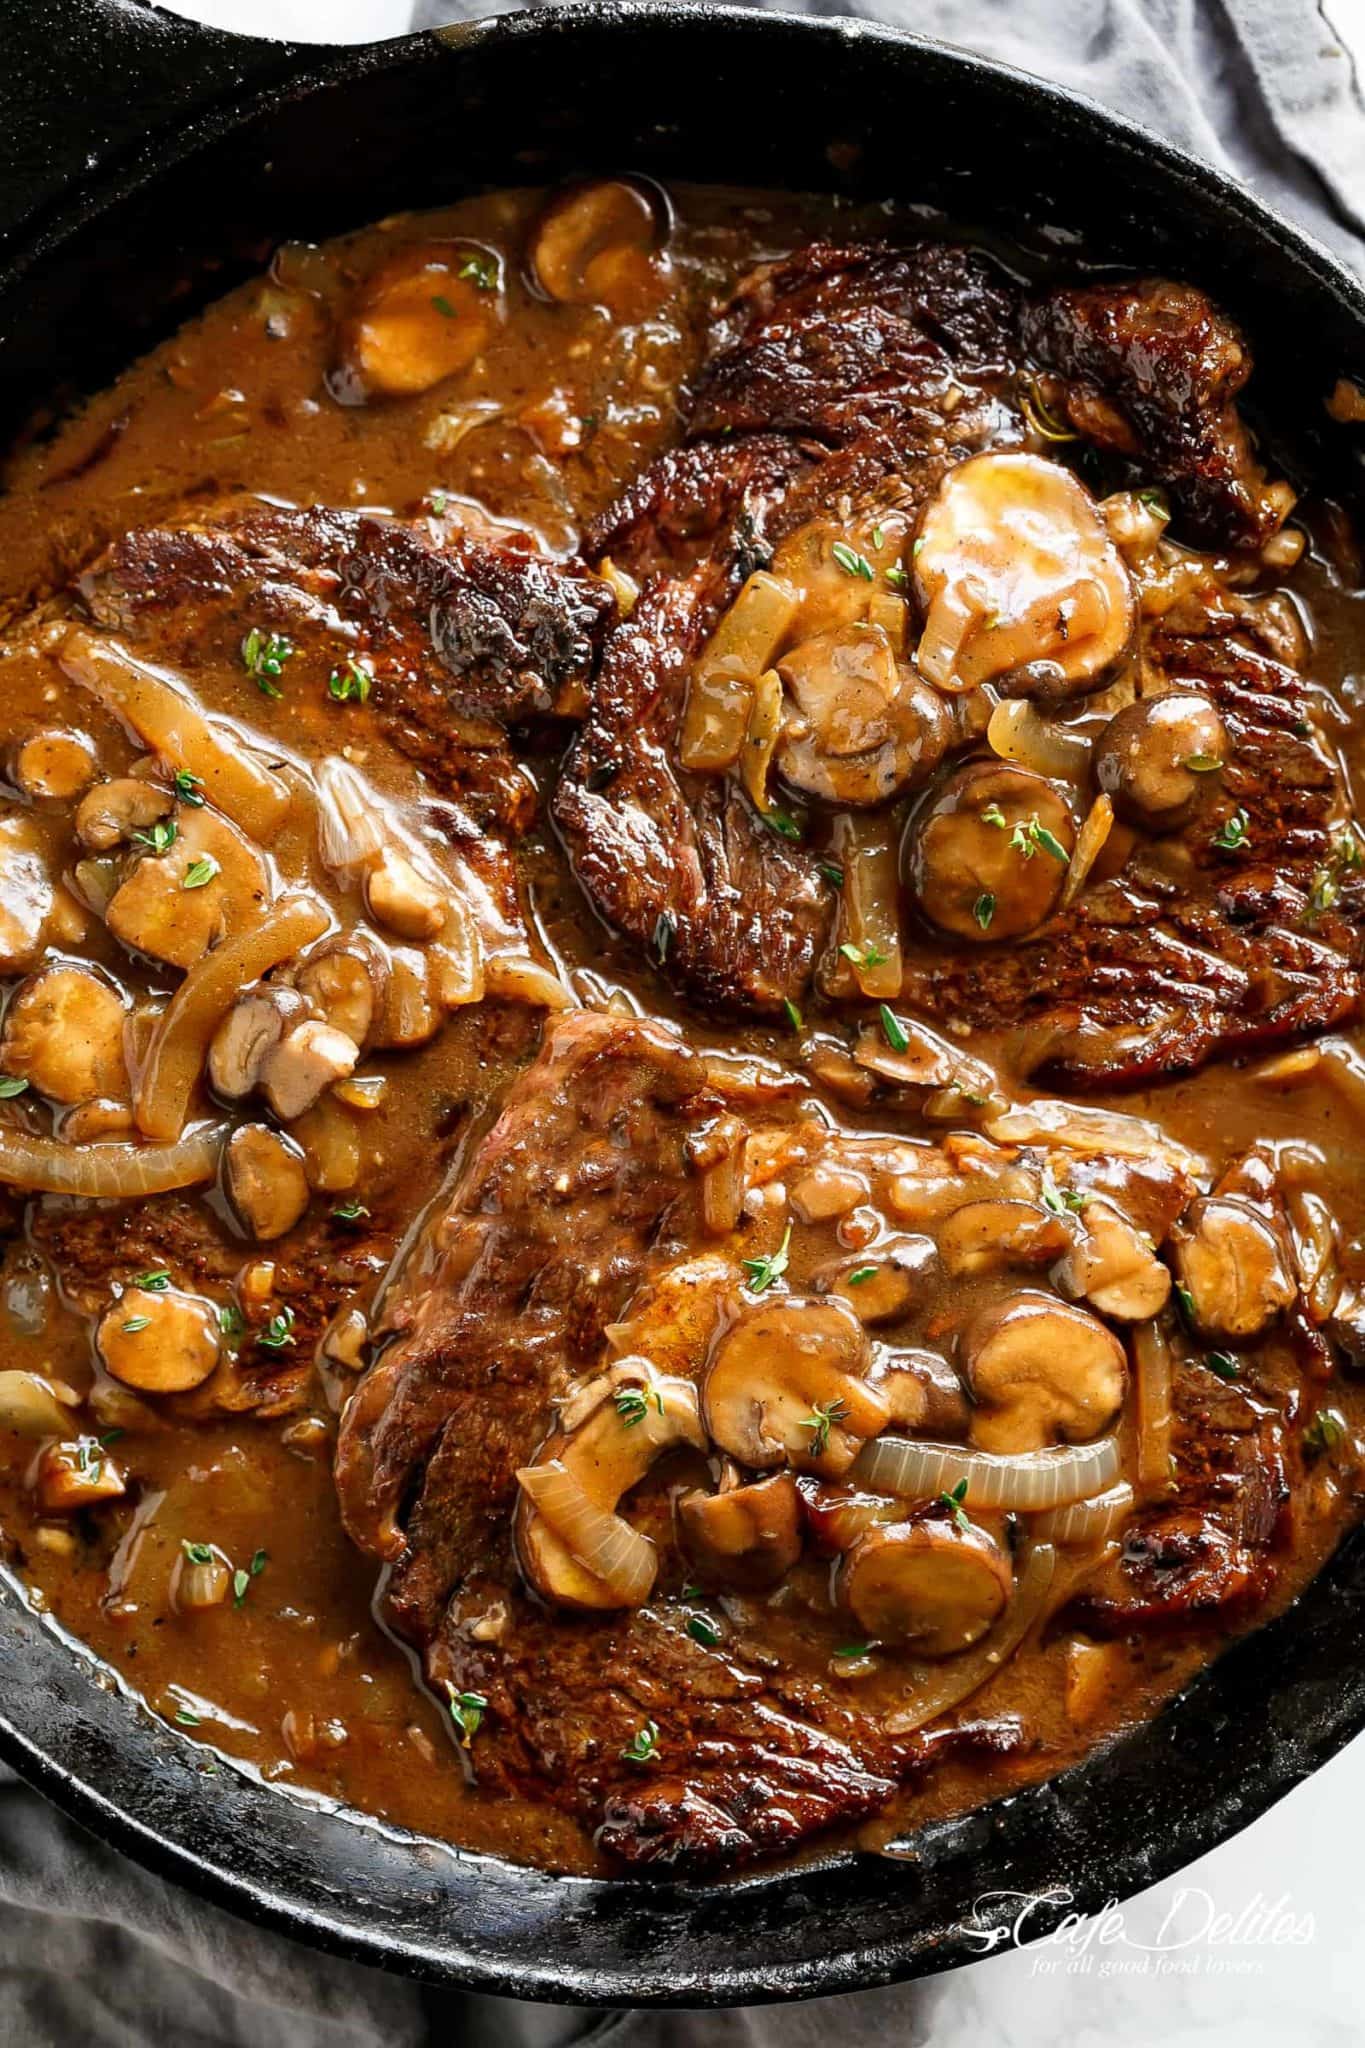 Steaks With Mushroom Gravy - Cafe Delites